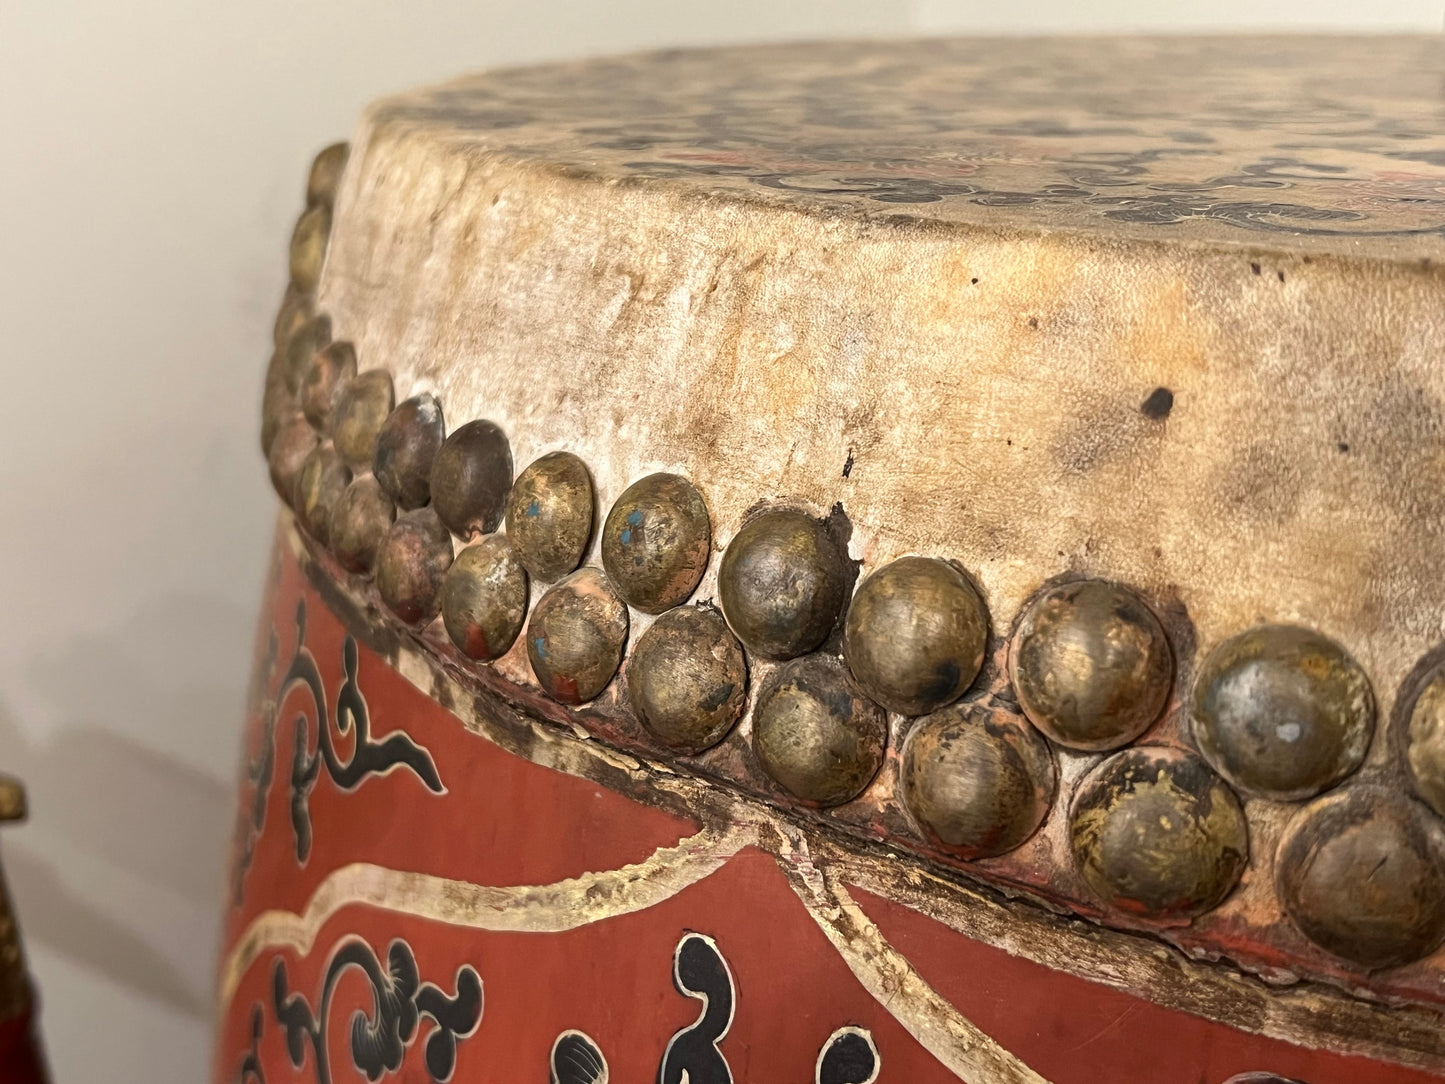 Vintage Taiko Drum in Chinese Motifs w/ Stand Sticks Accessories 26"x18"